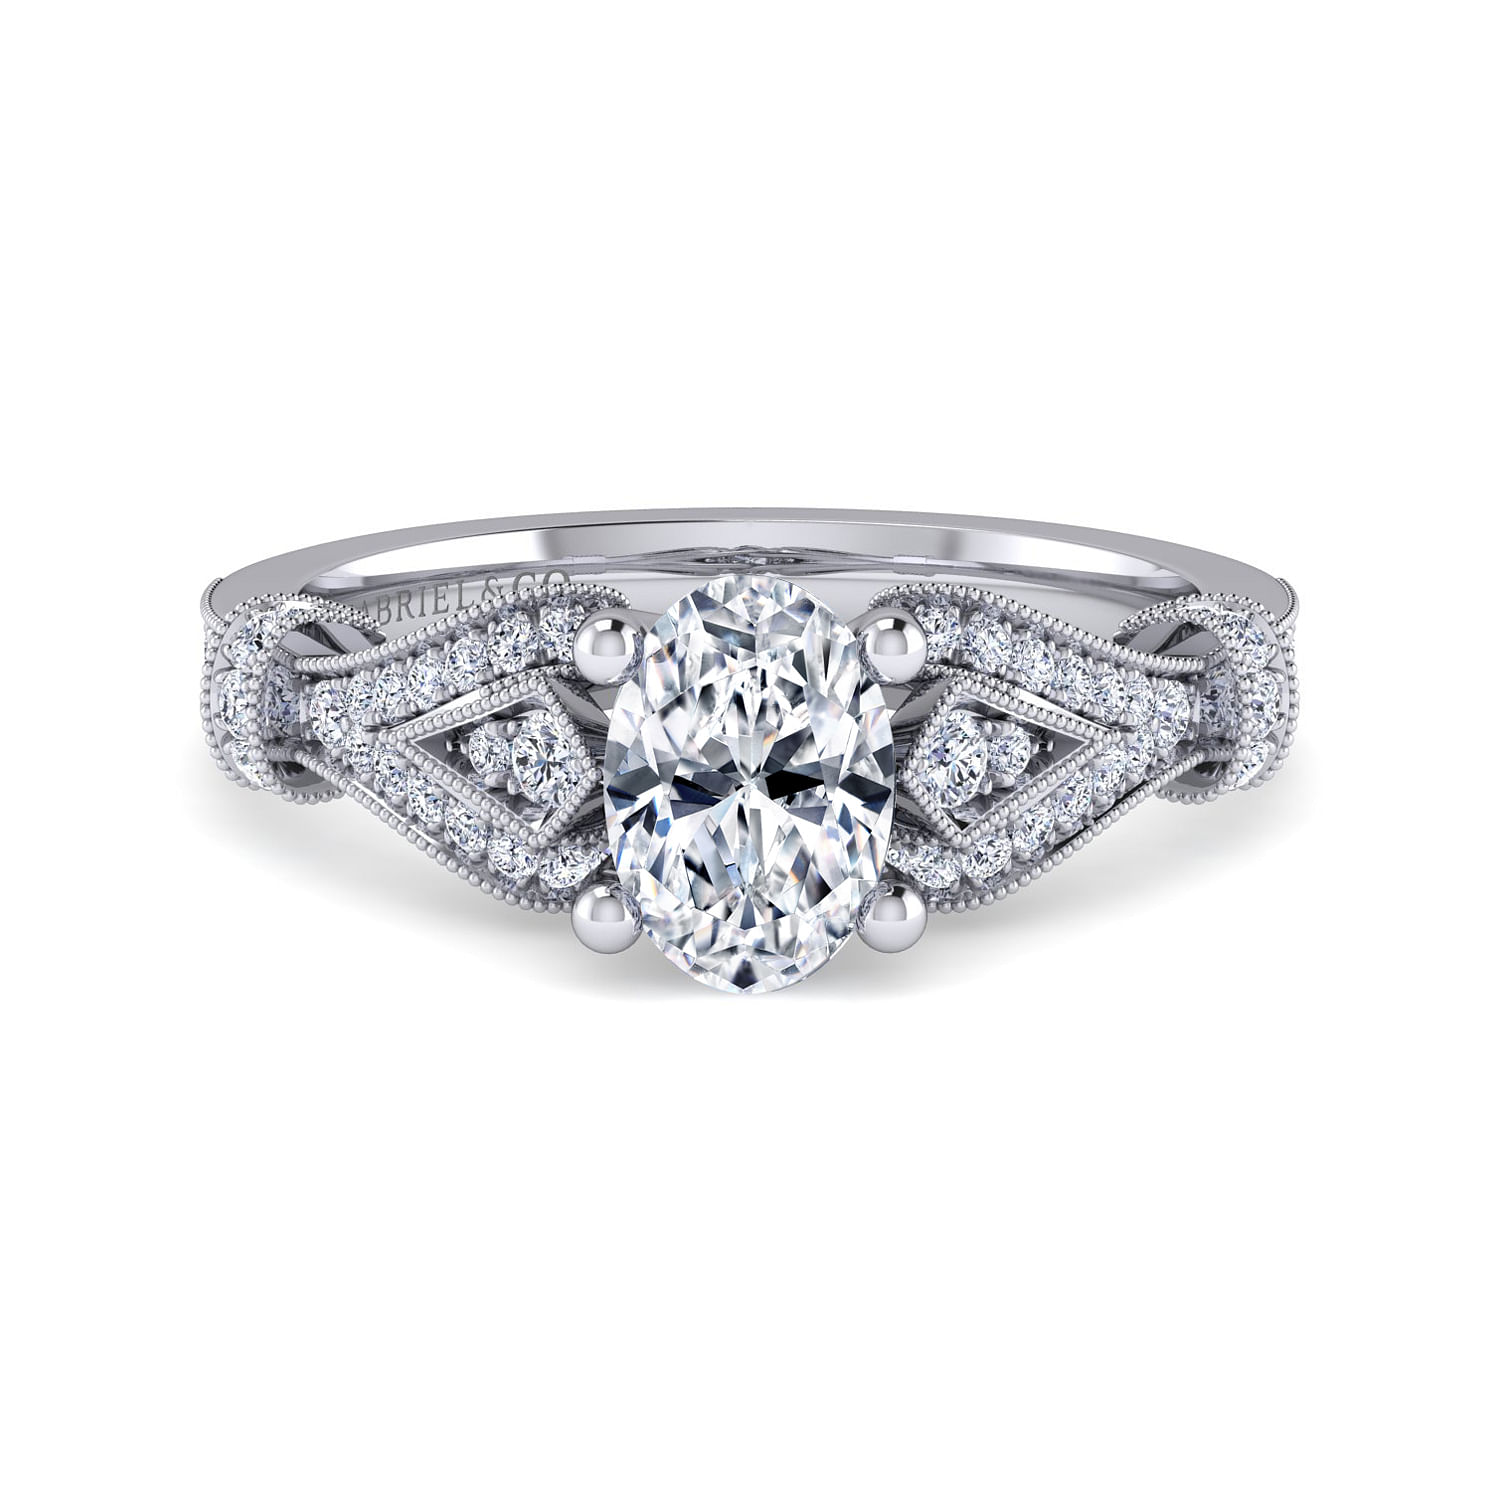 Lucille - Vintage Inspired 14K White Gold Oval Diamond Engagement Ring